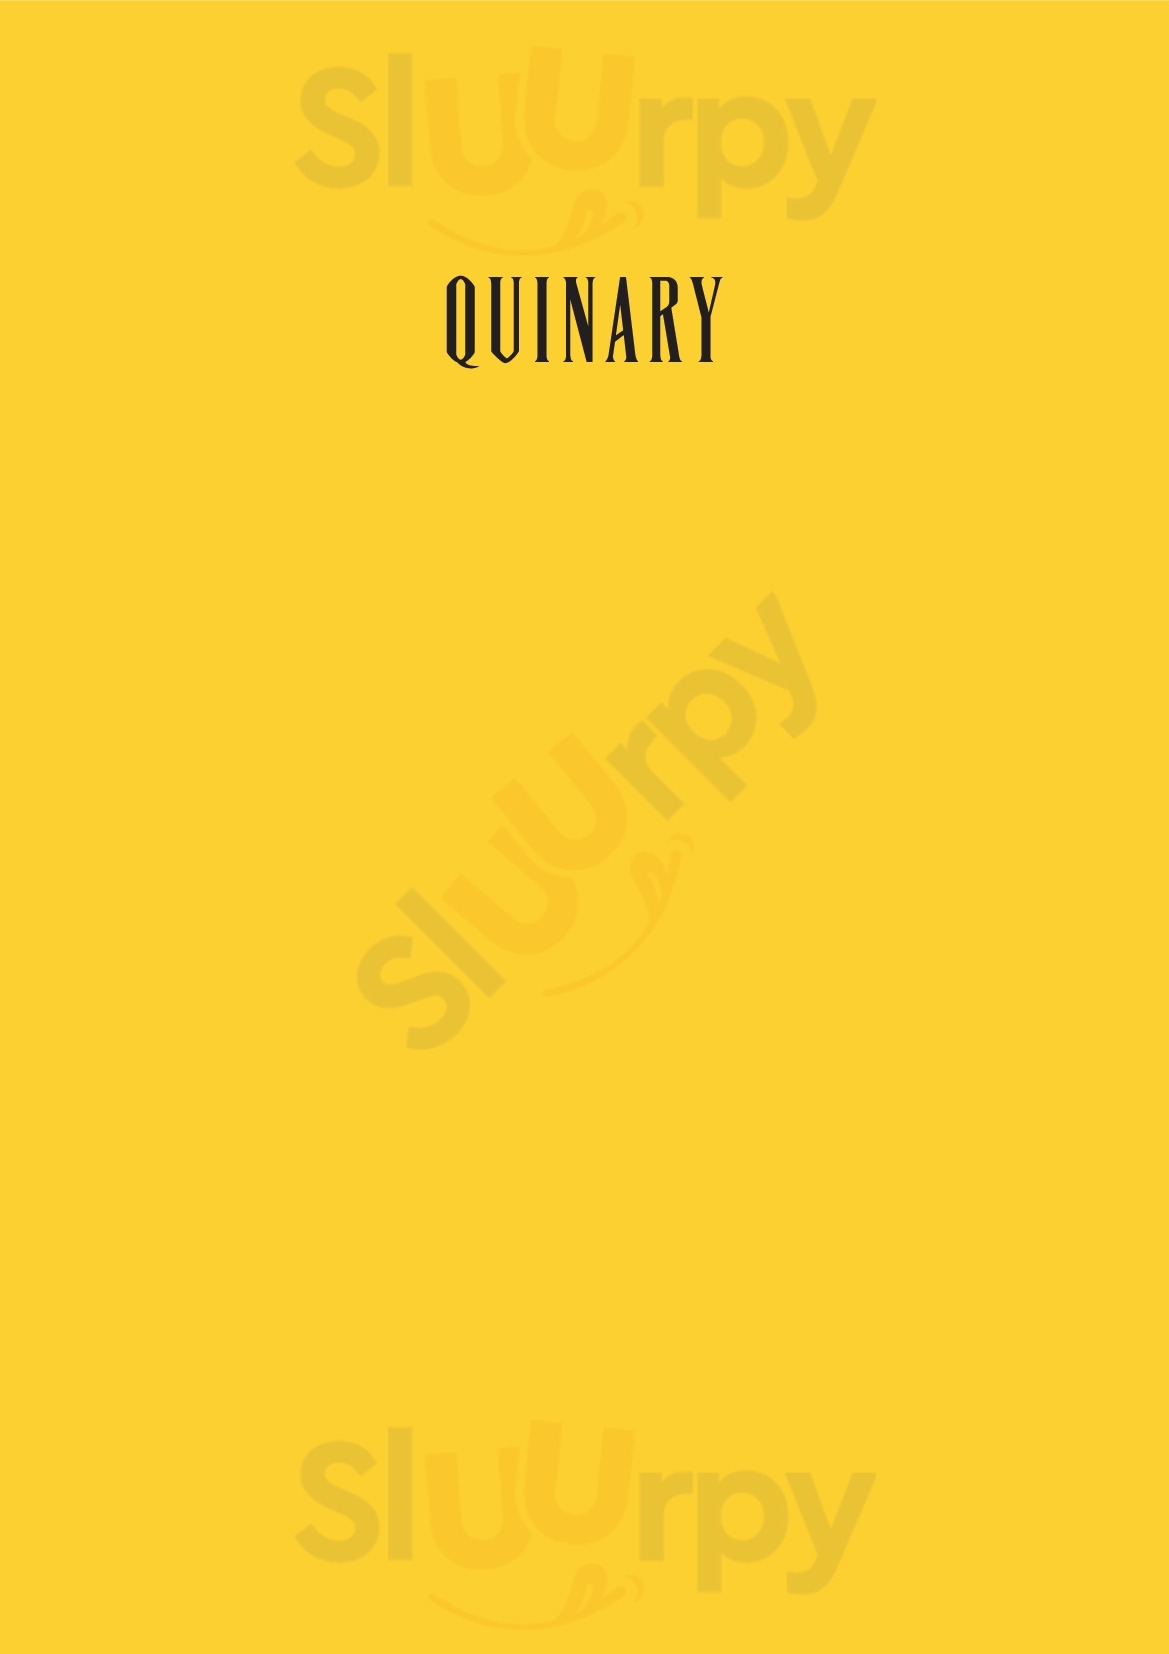 Quinary 香港 Menu - 1